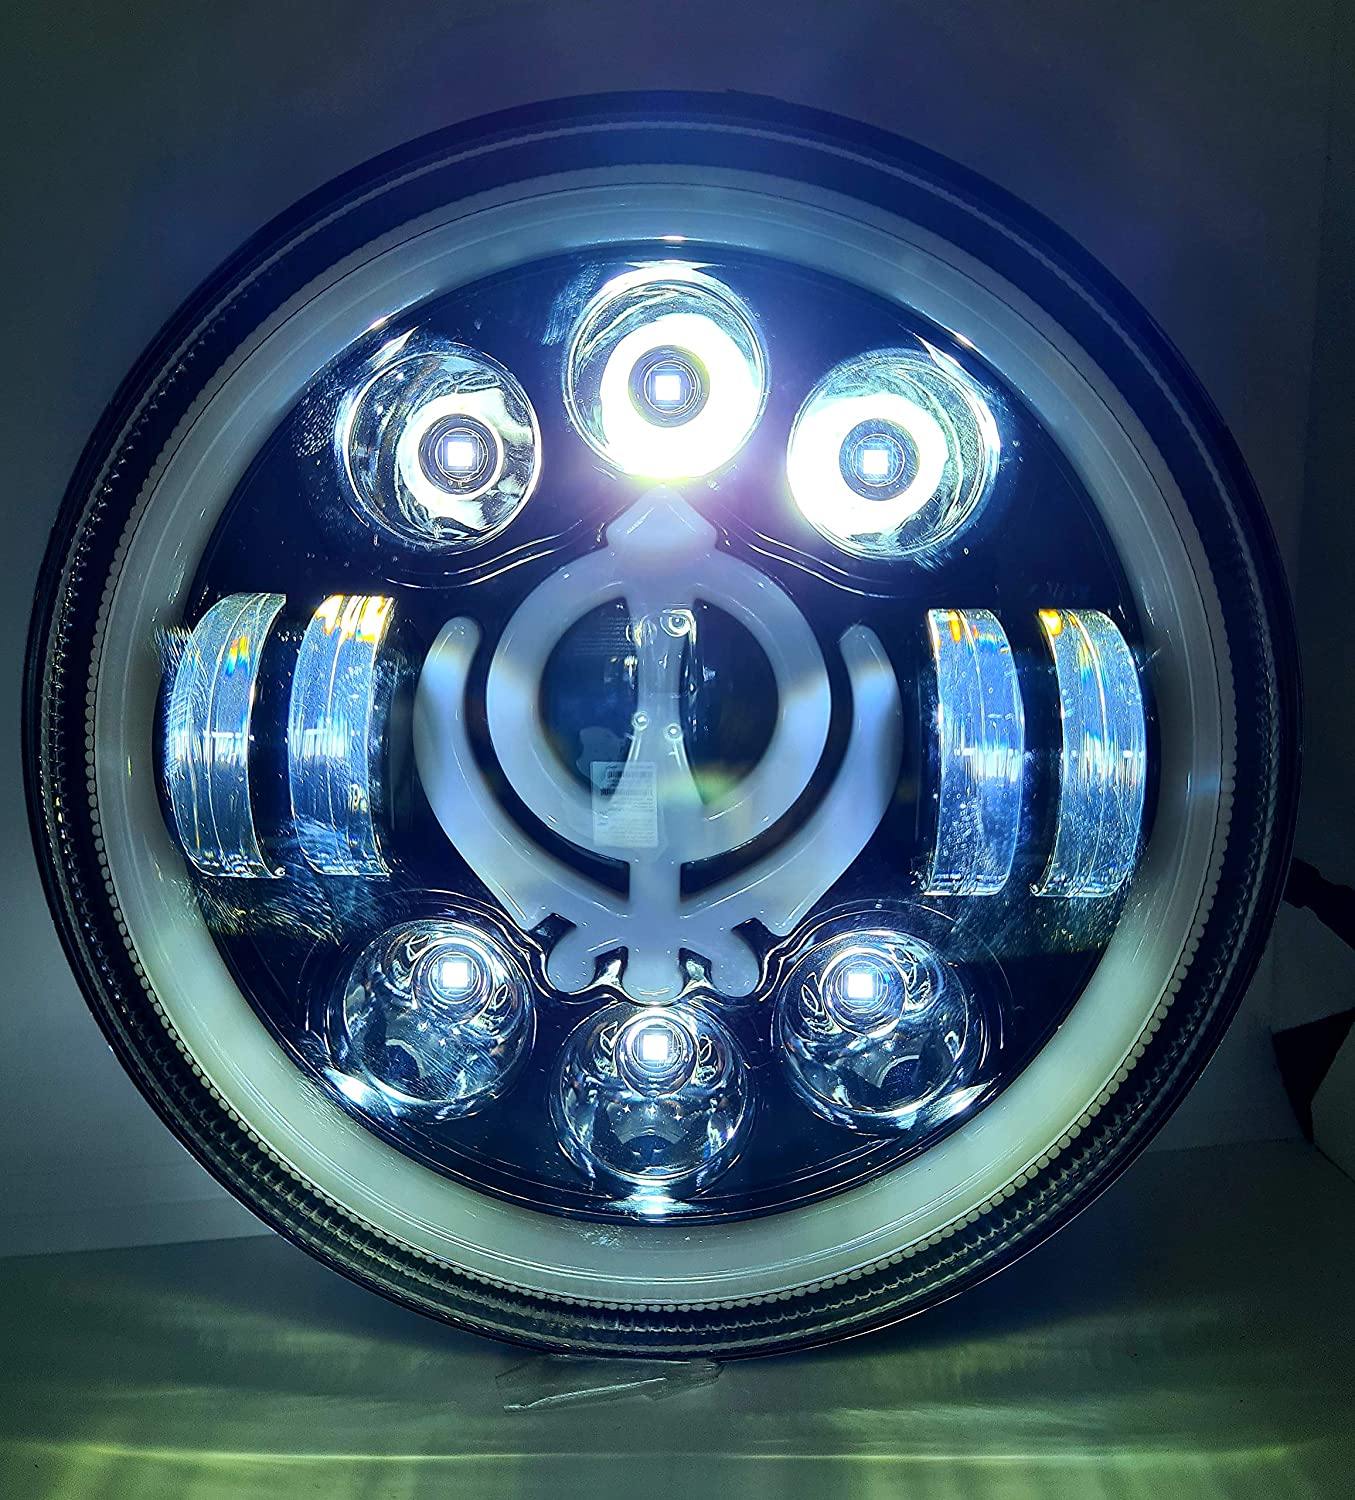 Headlight(Khanda) 7 Inch - Premium Headlights from Sparewick - Just Rs. 3100! Shop now at Sparewick